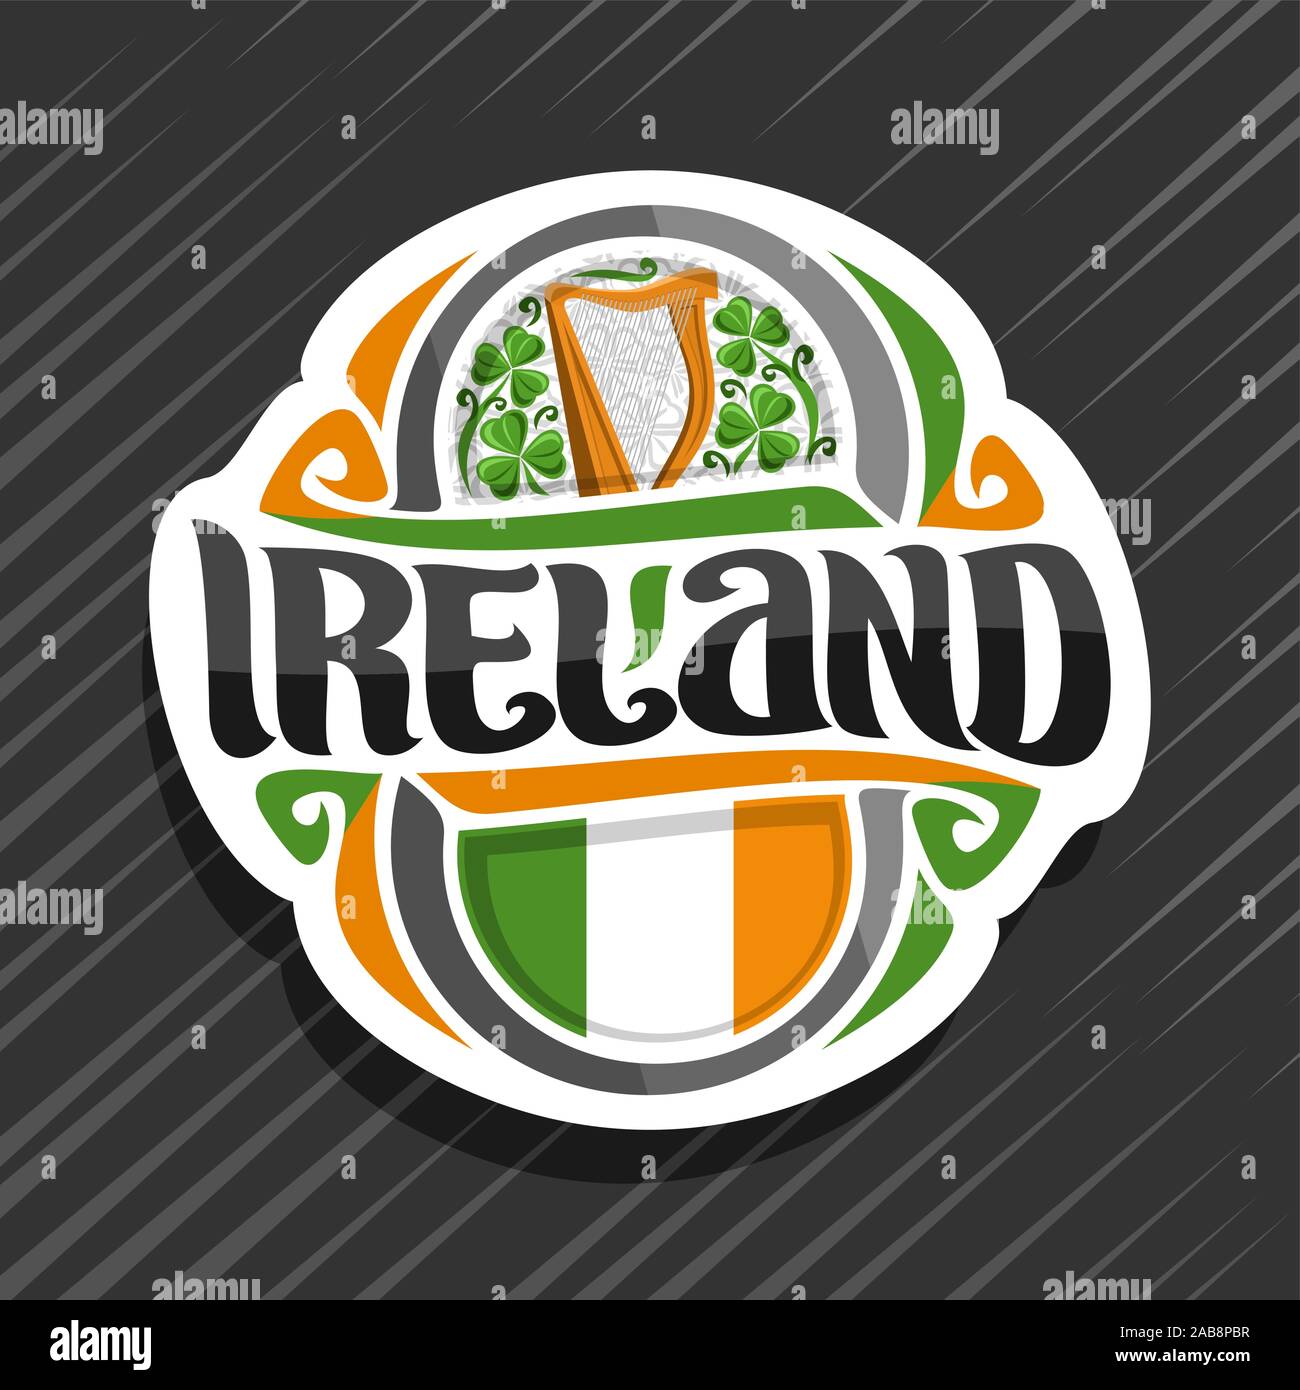 Vector logo for Ireland country, fridge magnet with irish flag, original brush typeface for word ireland and irish national symbols - music instrument Stock Vector